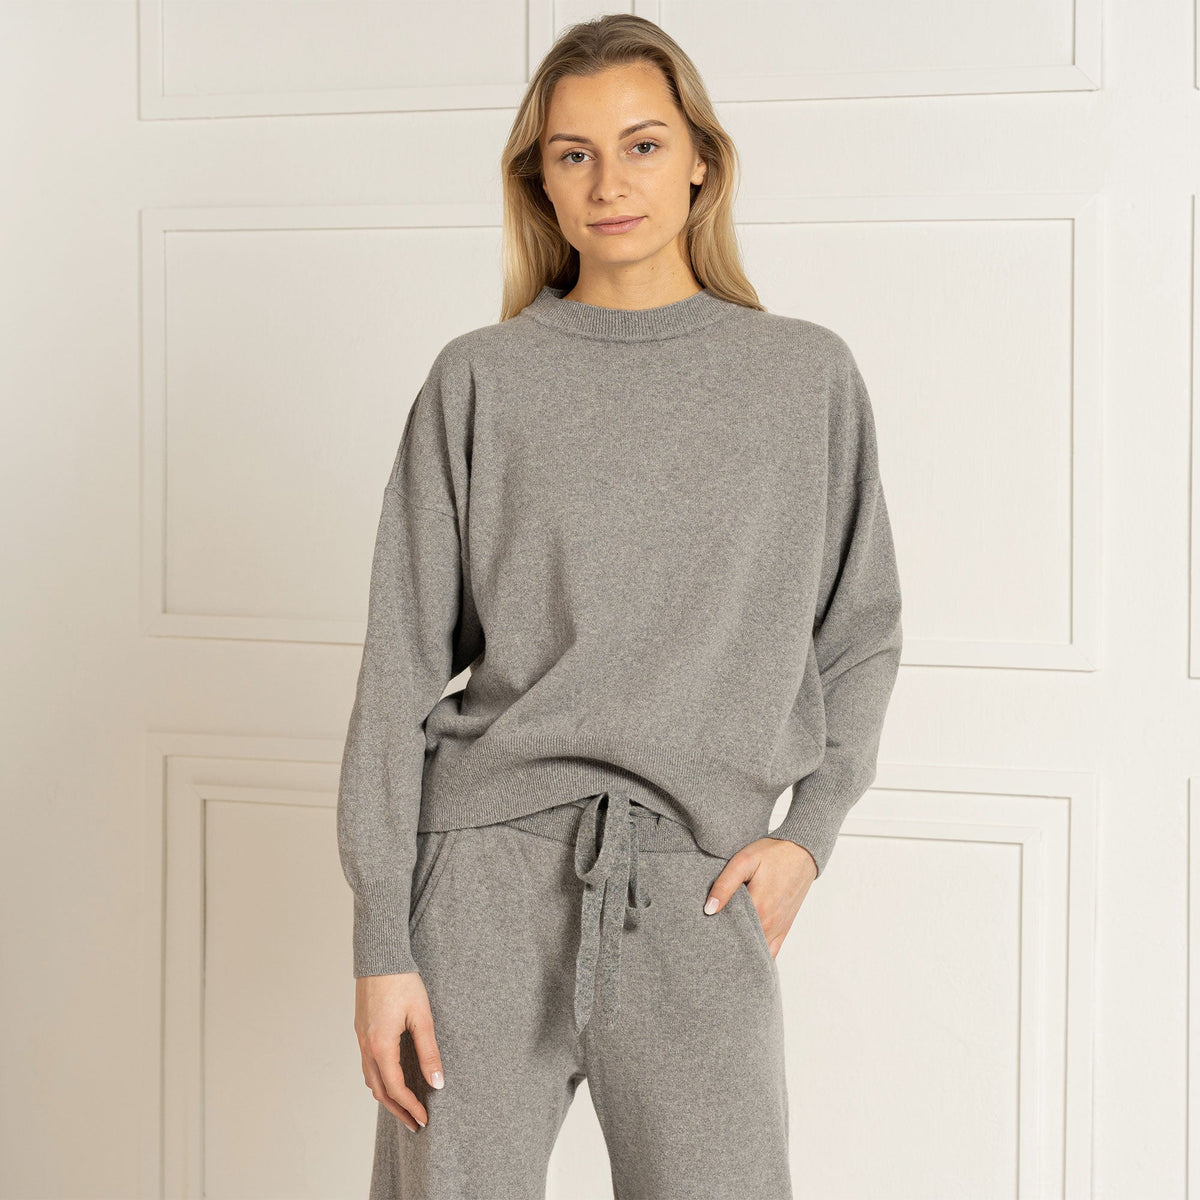 MENIQUE Knit Crew 100% Merino Wool Womens Shirtneck Sweater Oslo Light Gray